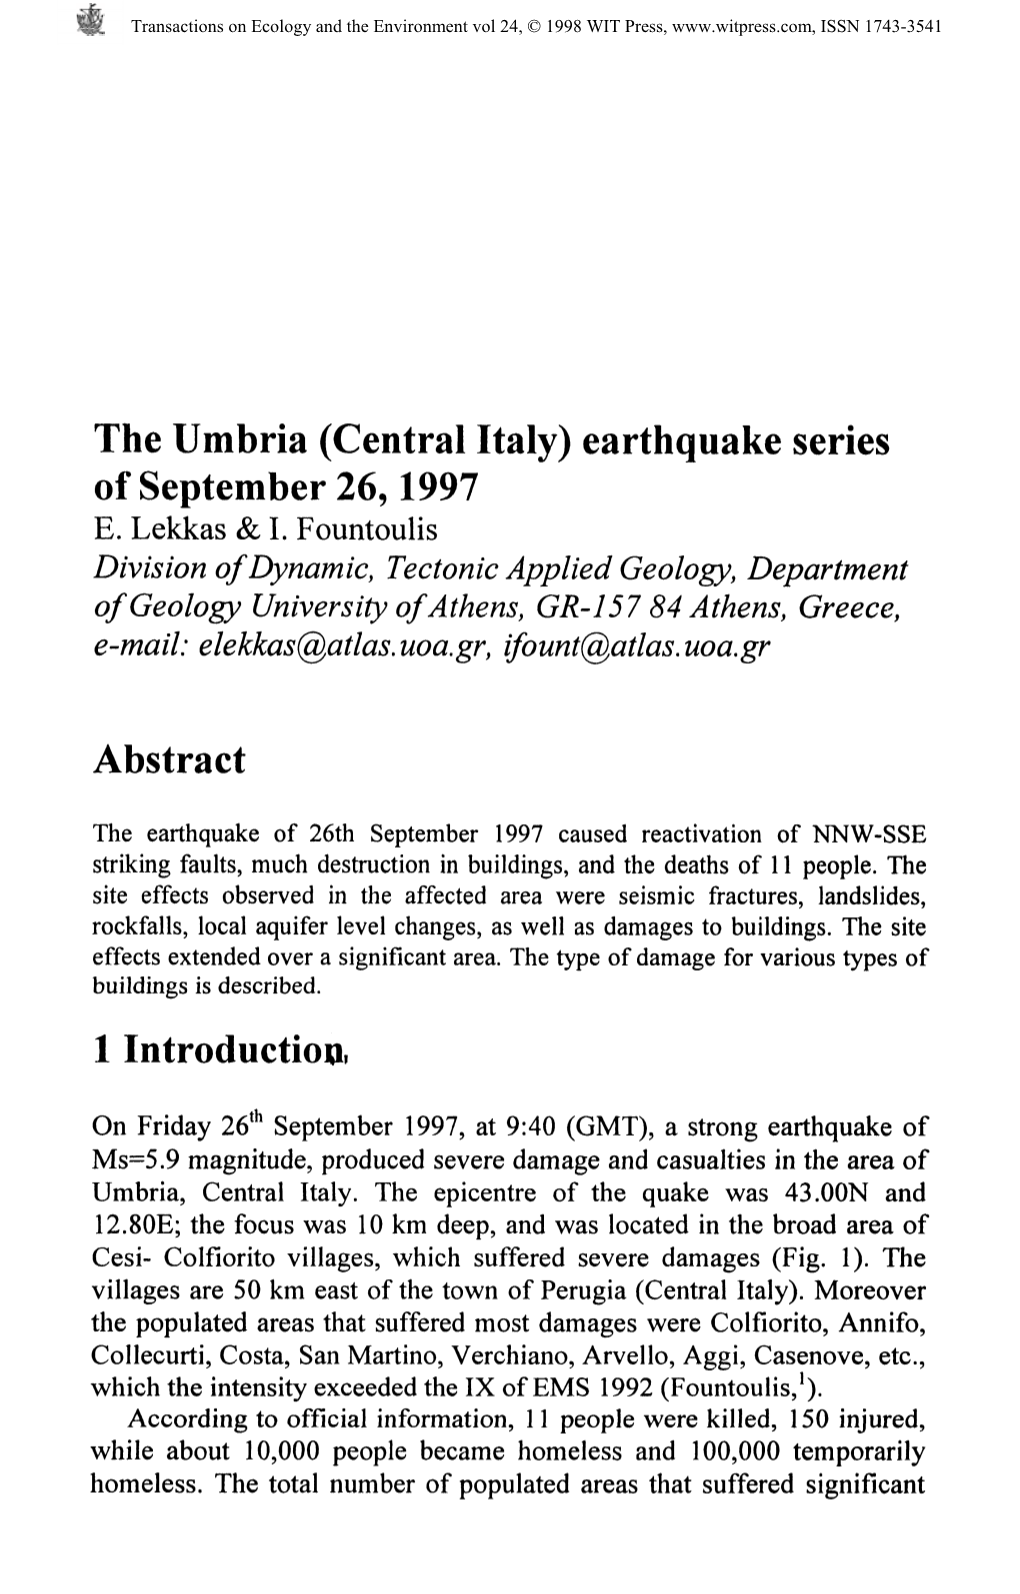 The Umbria (Central Italy) Earthquake Series of September 26,1997 E